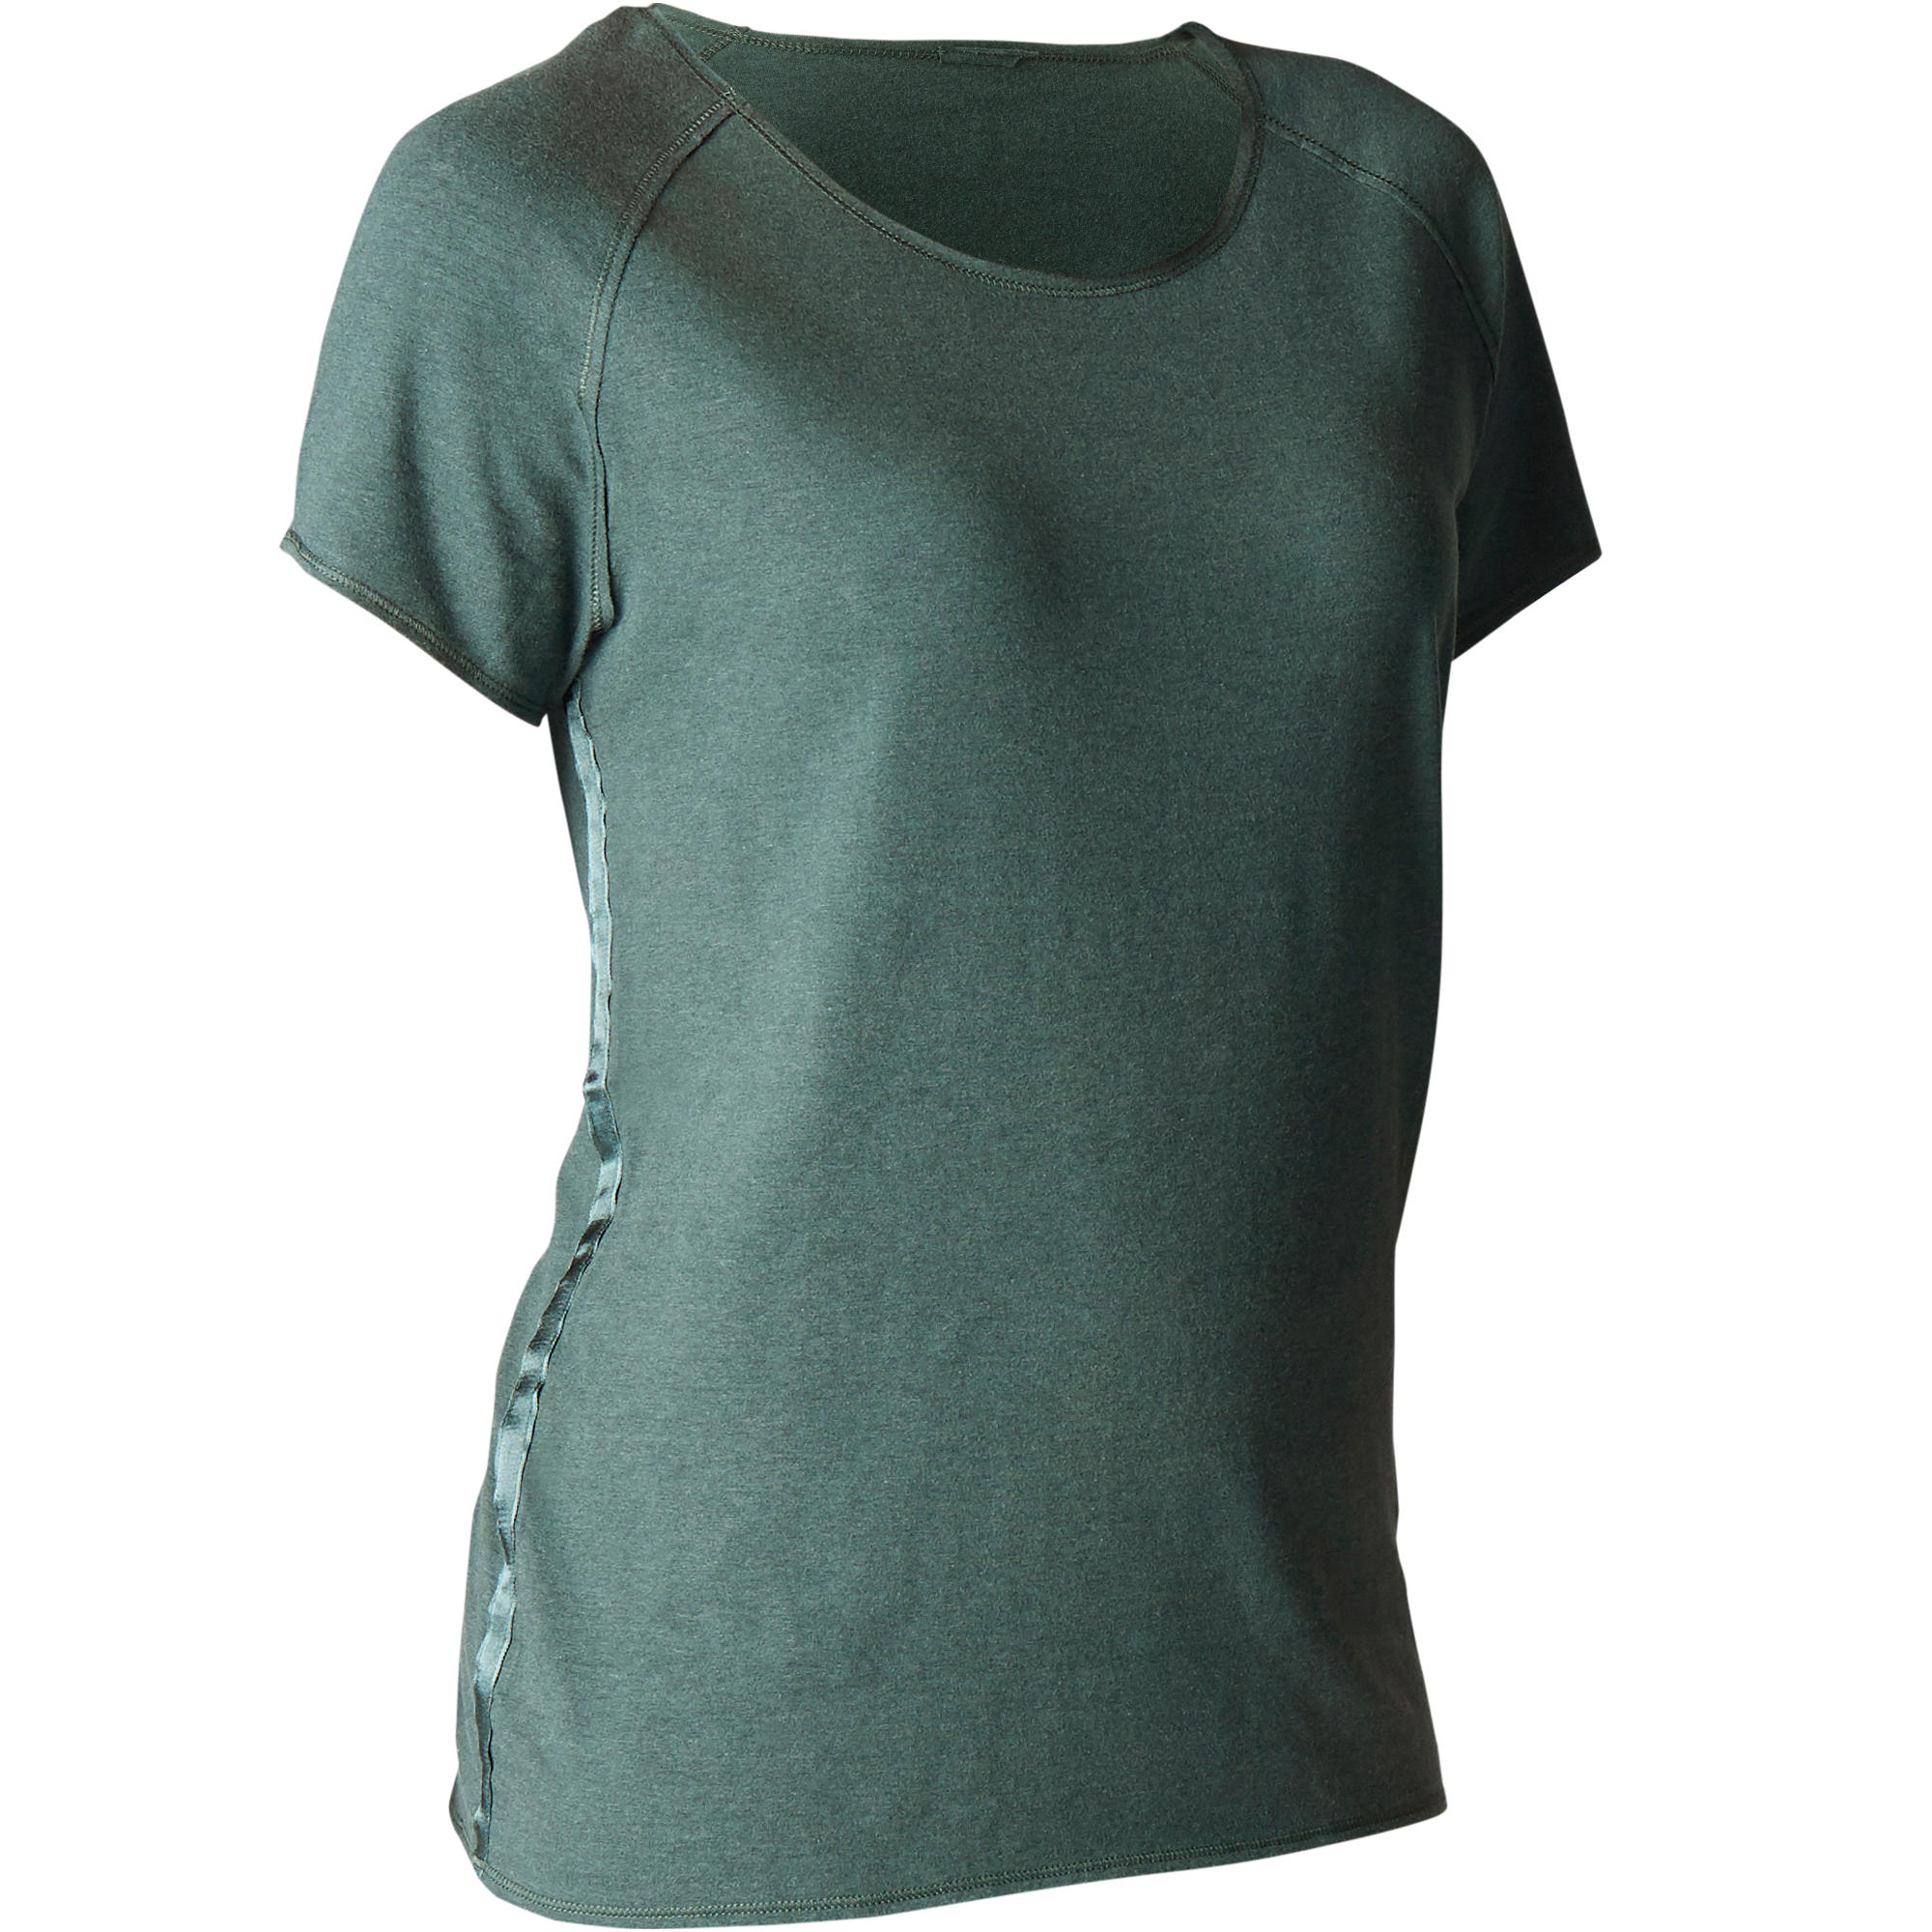 KIMJALY Women's Organic Cotton Gentle Yoga T-Shirt - Dark Green